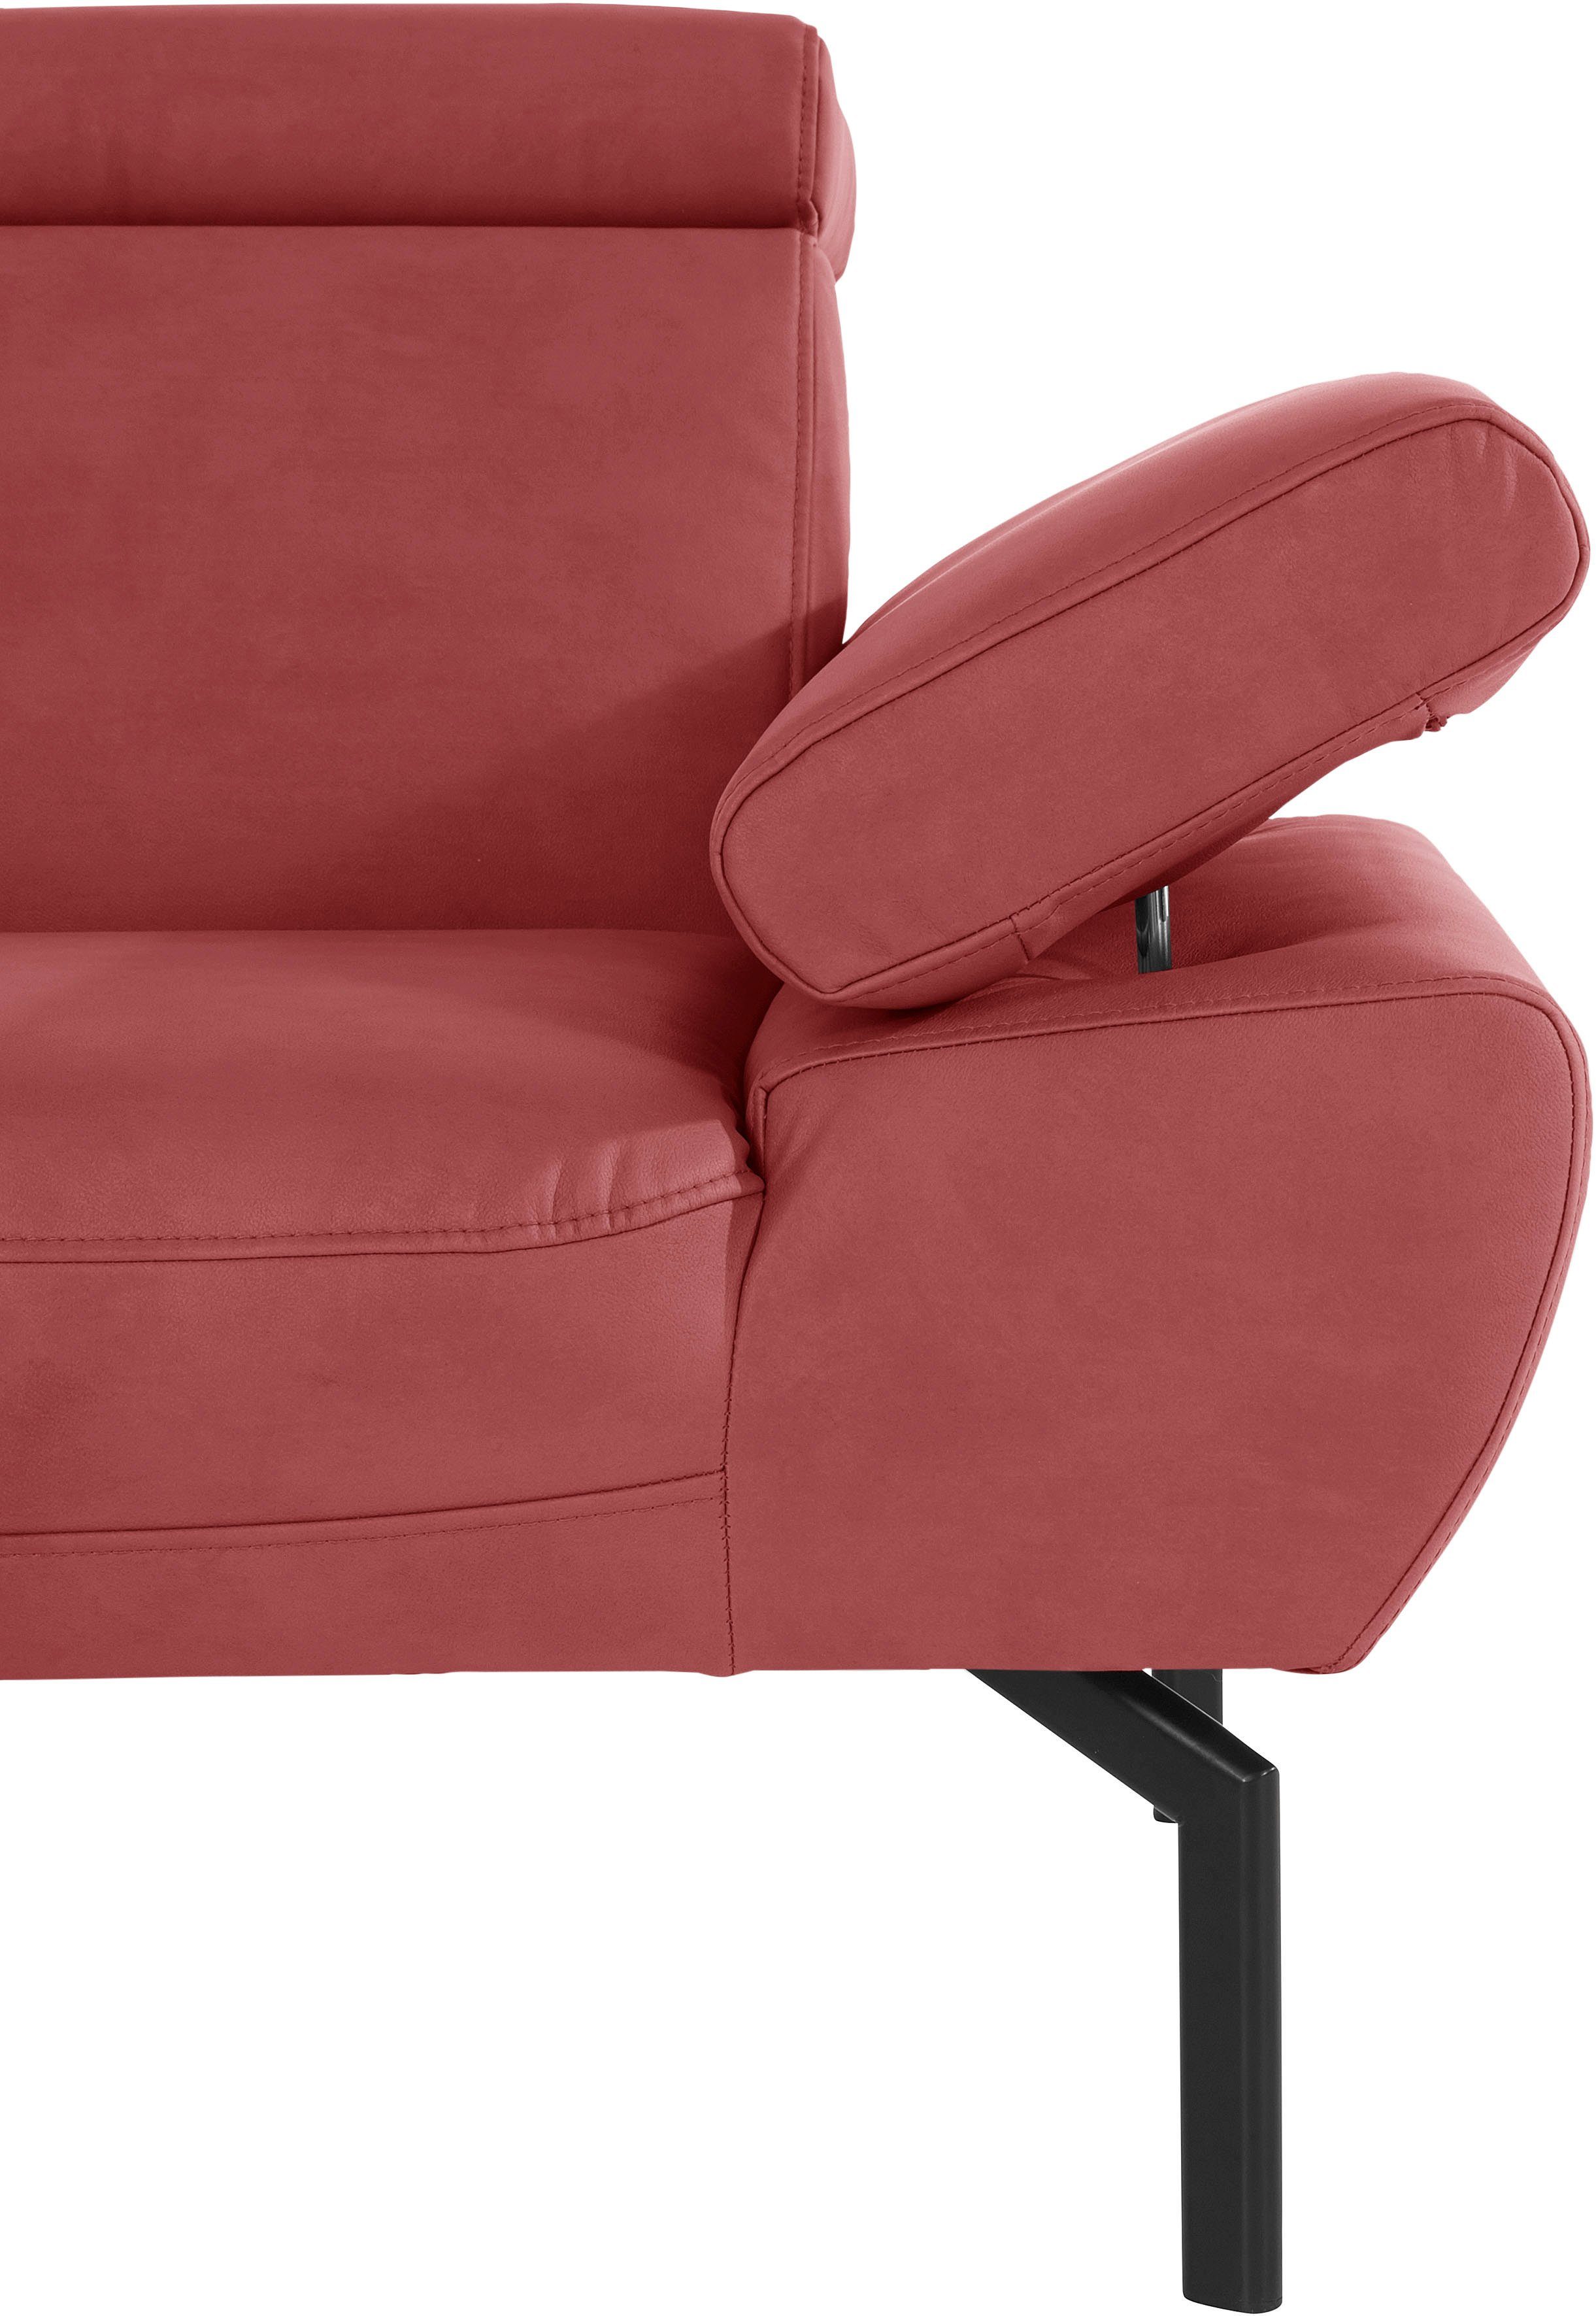 Places of Style Sessel mit wahlweise Lederoptik Trapino Rückenverstellung, Luxus-Microfaser in Luxus